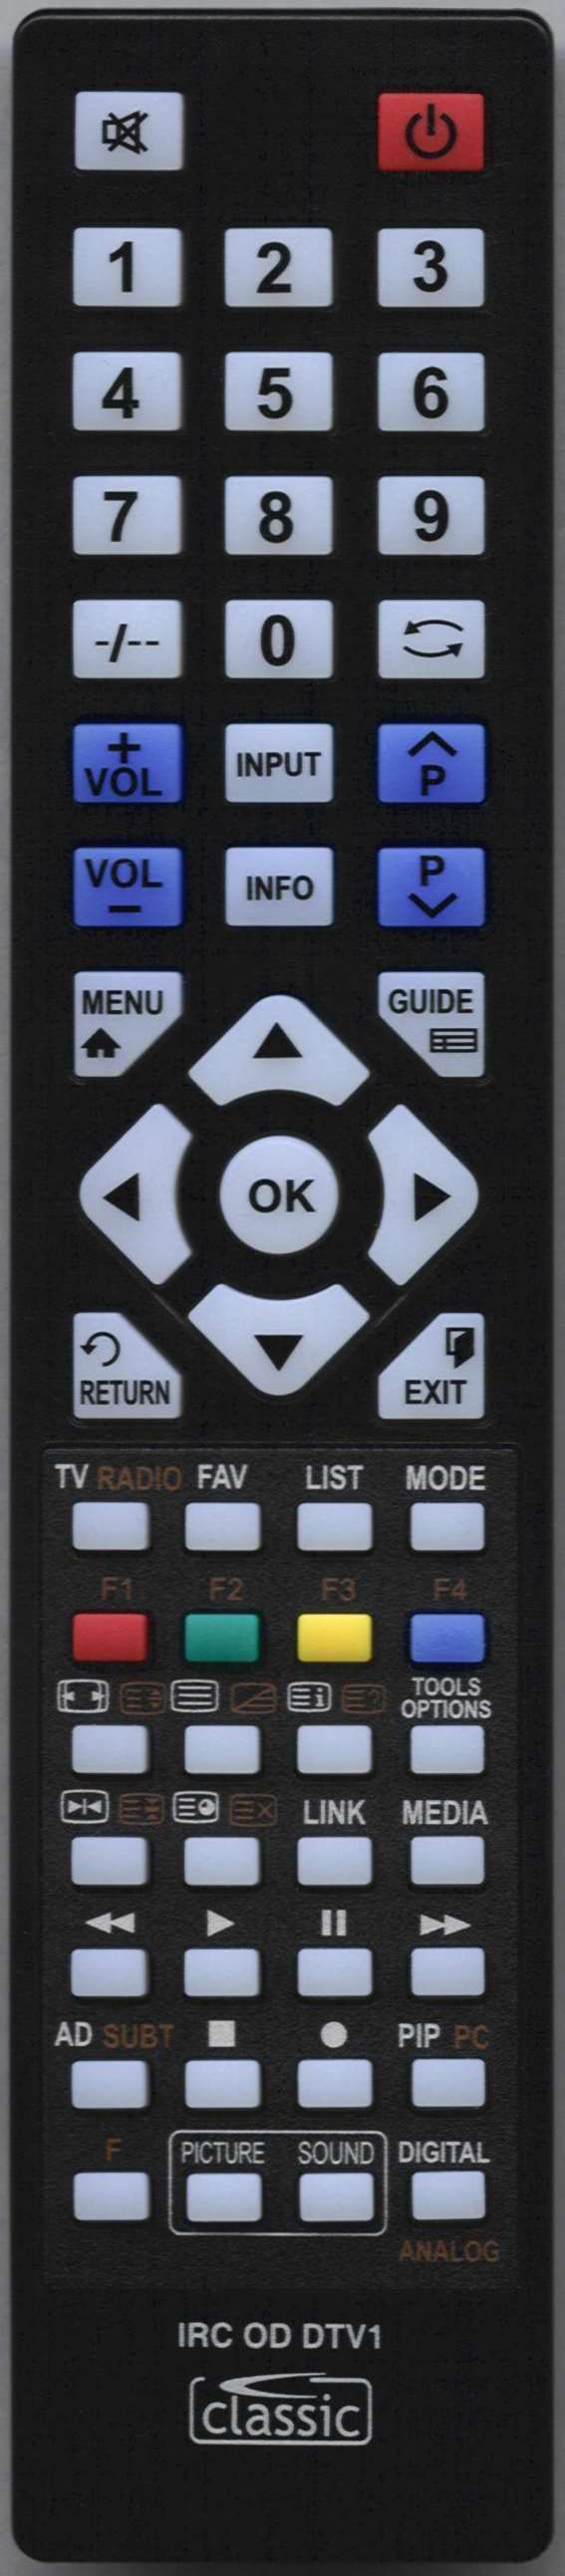 SEIKI SE32HO02UK Remote Control